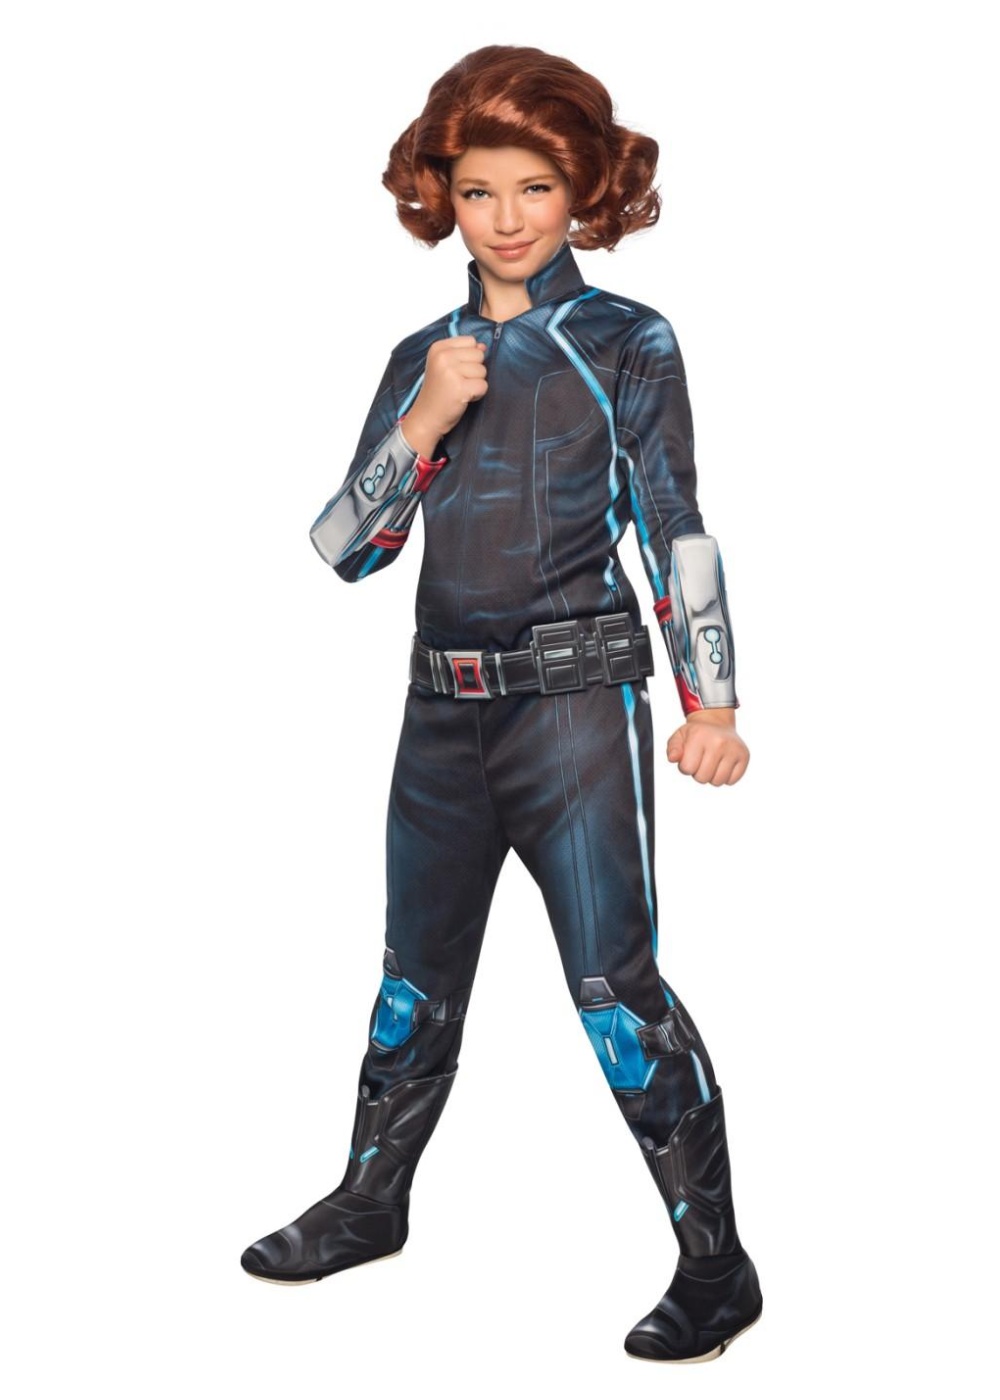  Girls Avengers Black Widow Costume